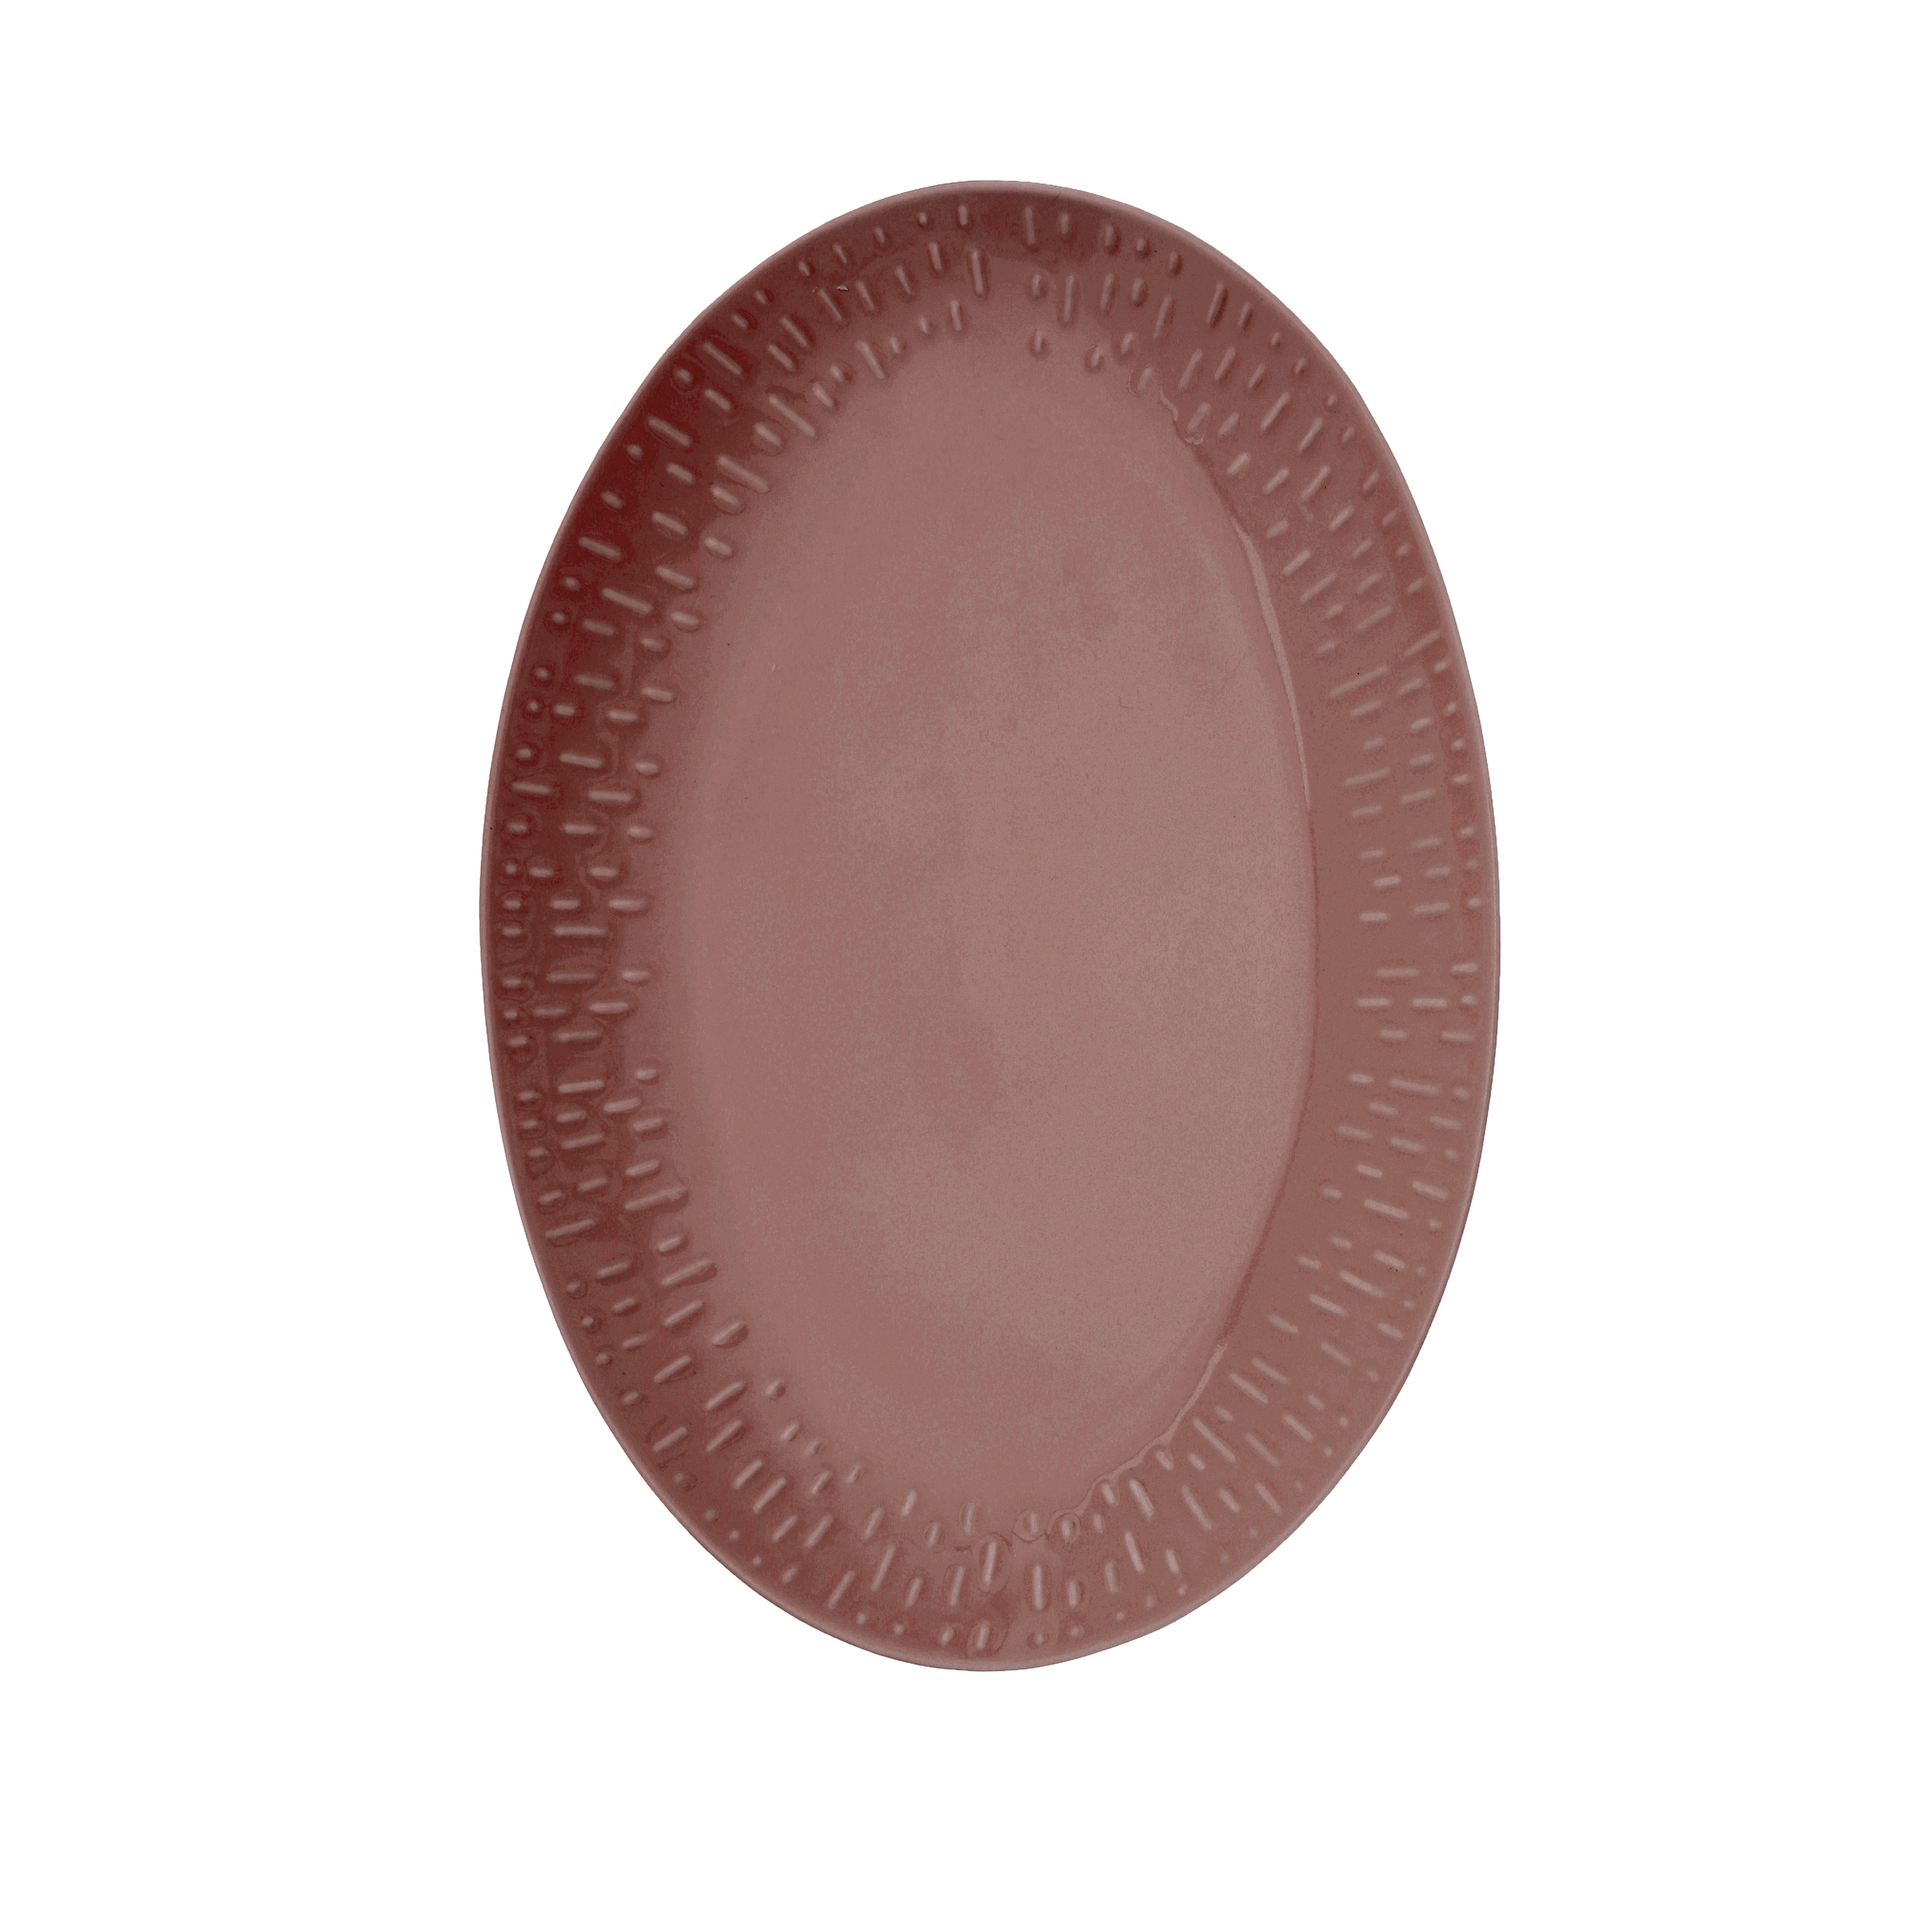 Aida - Life in Colour - Confetti - Bordeaux oval dish w/relief porcelain (13374) - Hjemme og kjøkken